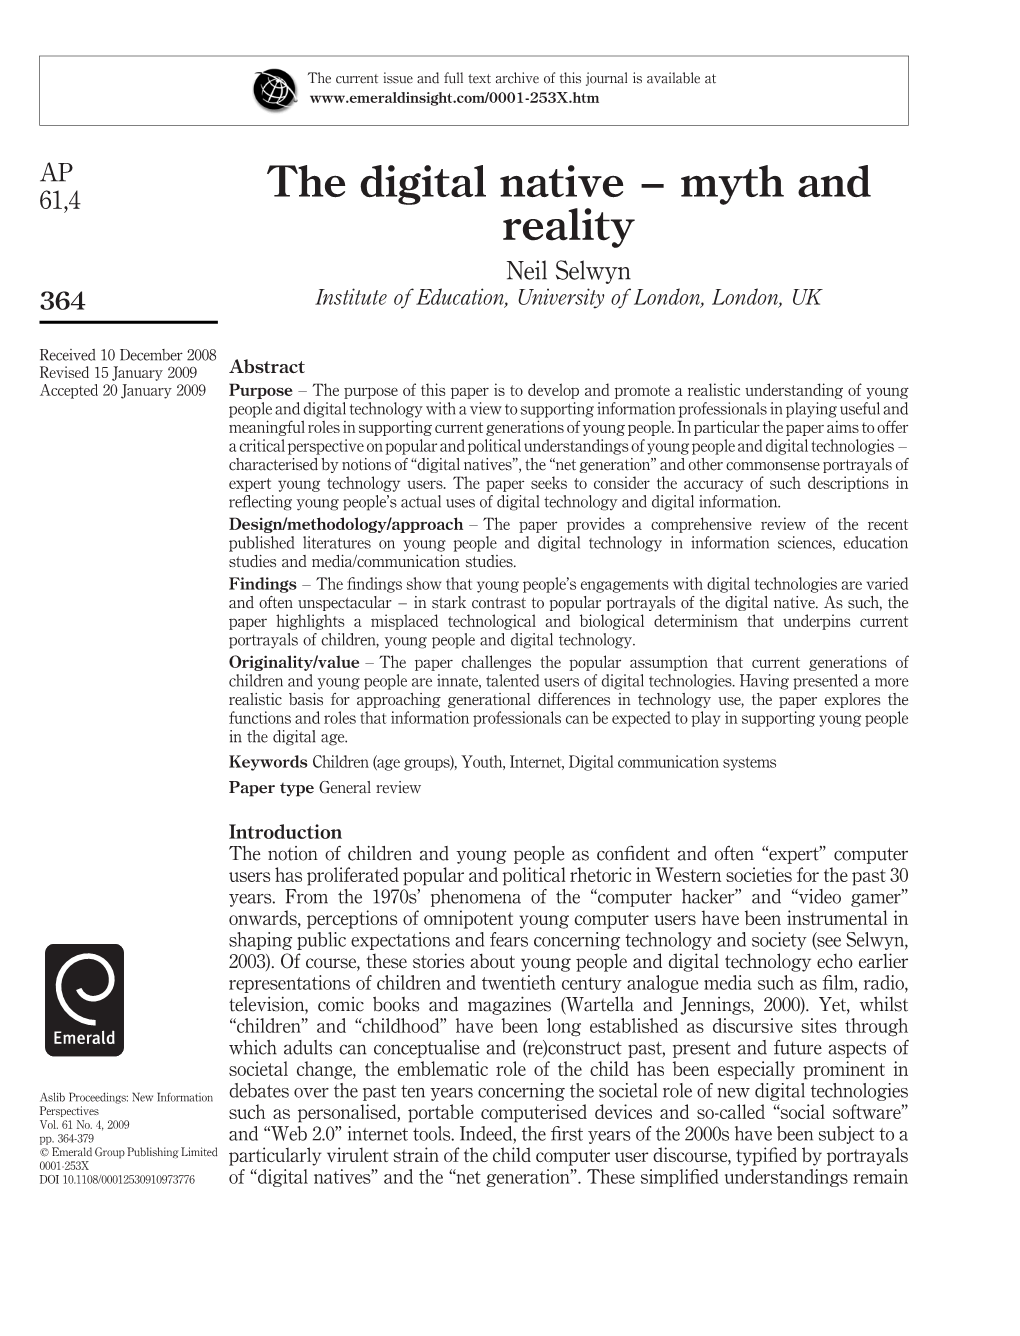 The Digital Native – Myth and Reality Neil Selwyn 364 Institute of Education, University of London, London, UK